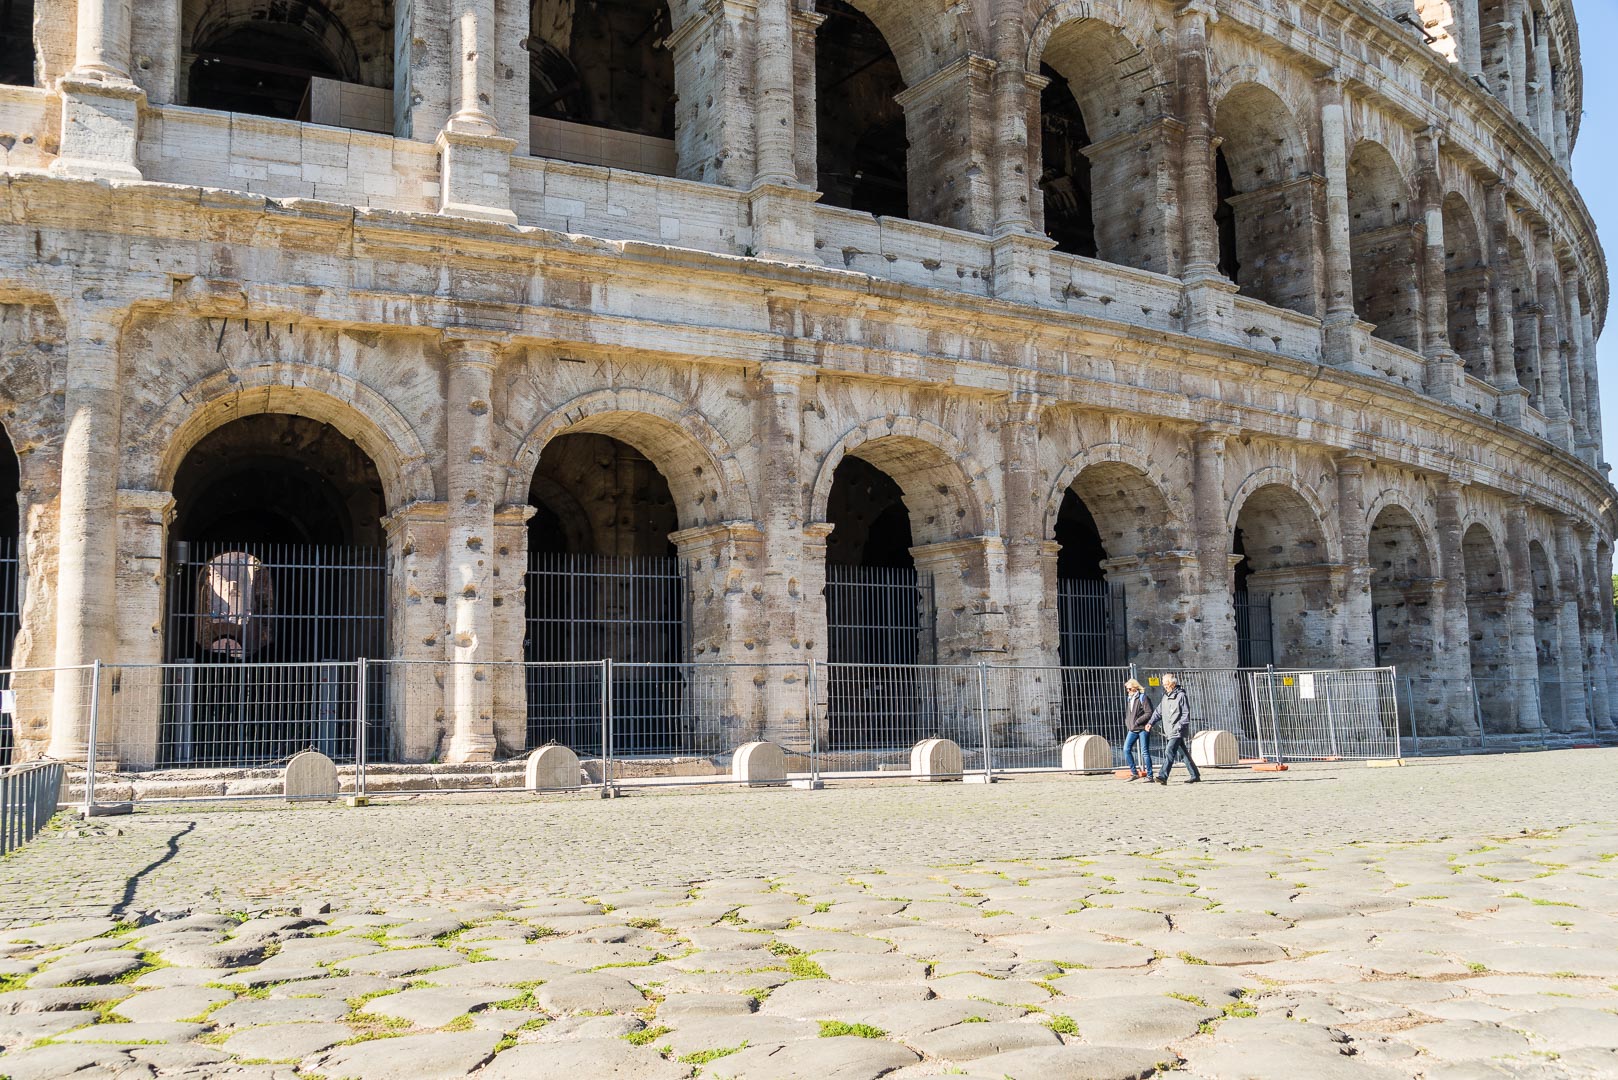 Backplate • ID: 4824 • HDRI Haven - Ruins Of Colosseum